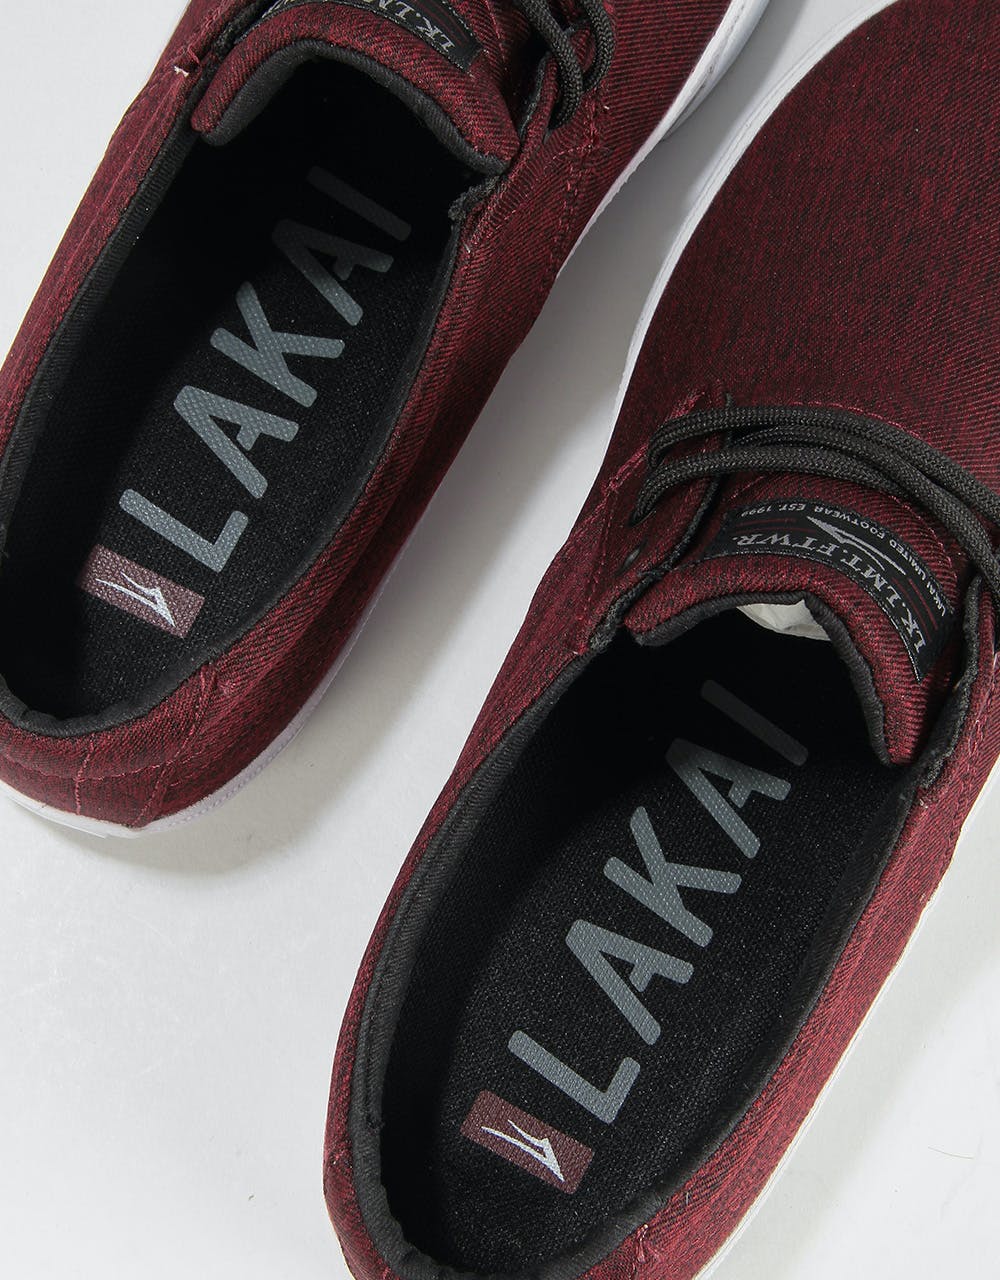 Lakai Daly Skate Shoes - Burgundy Textile